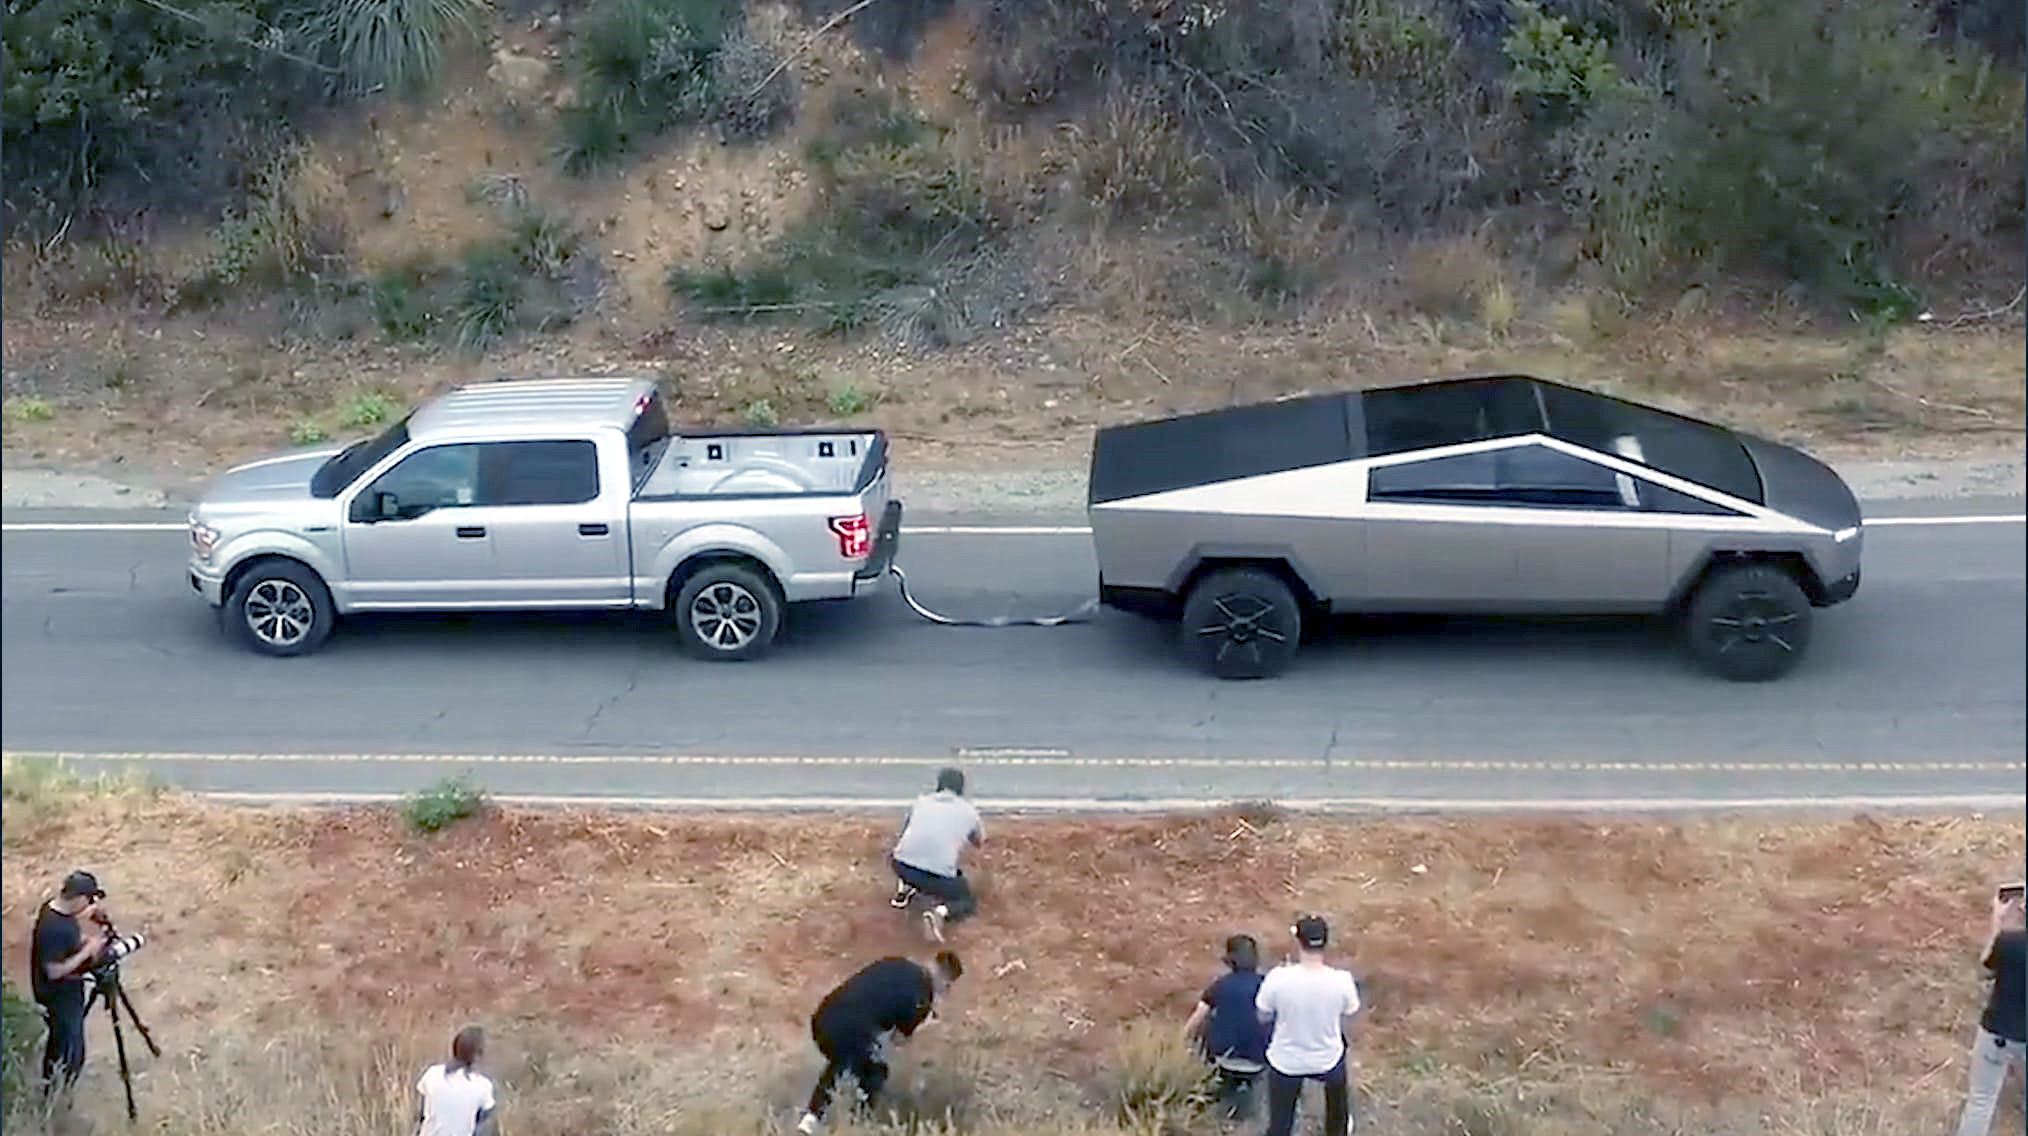 Tesla's Cybertruck Battles Ford F-150 in a Pickup Truck Showdown. It's All about Friction